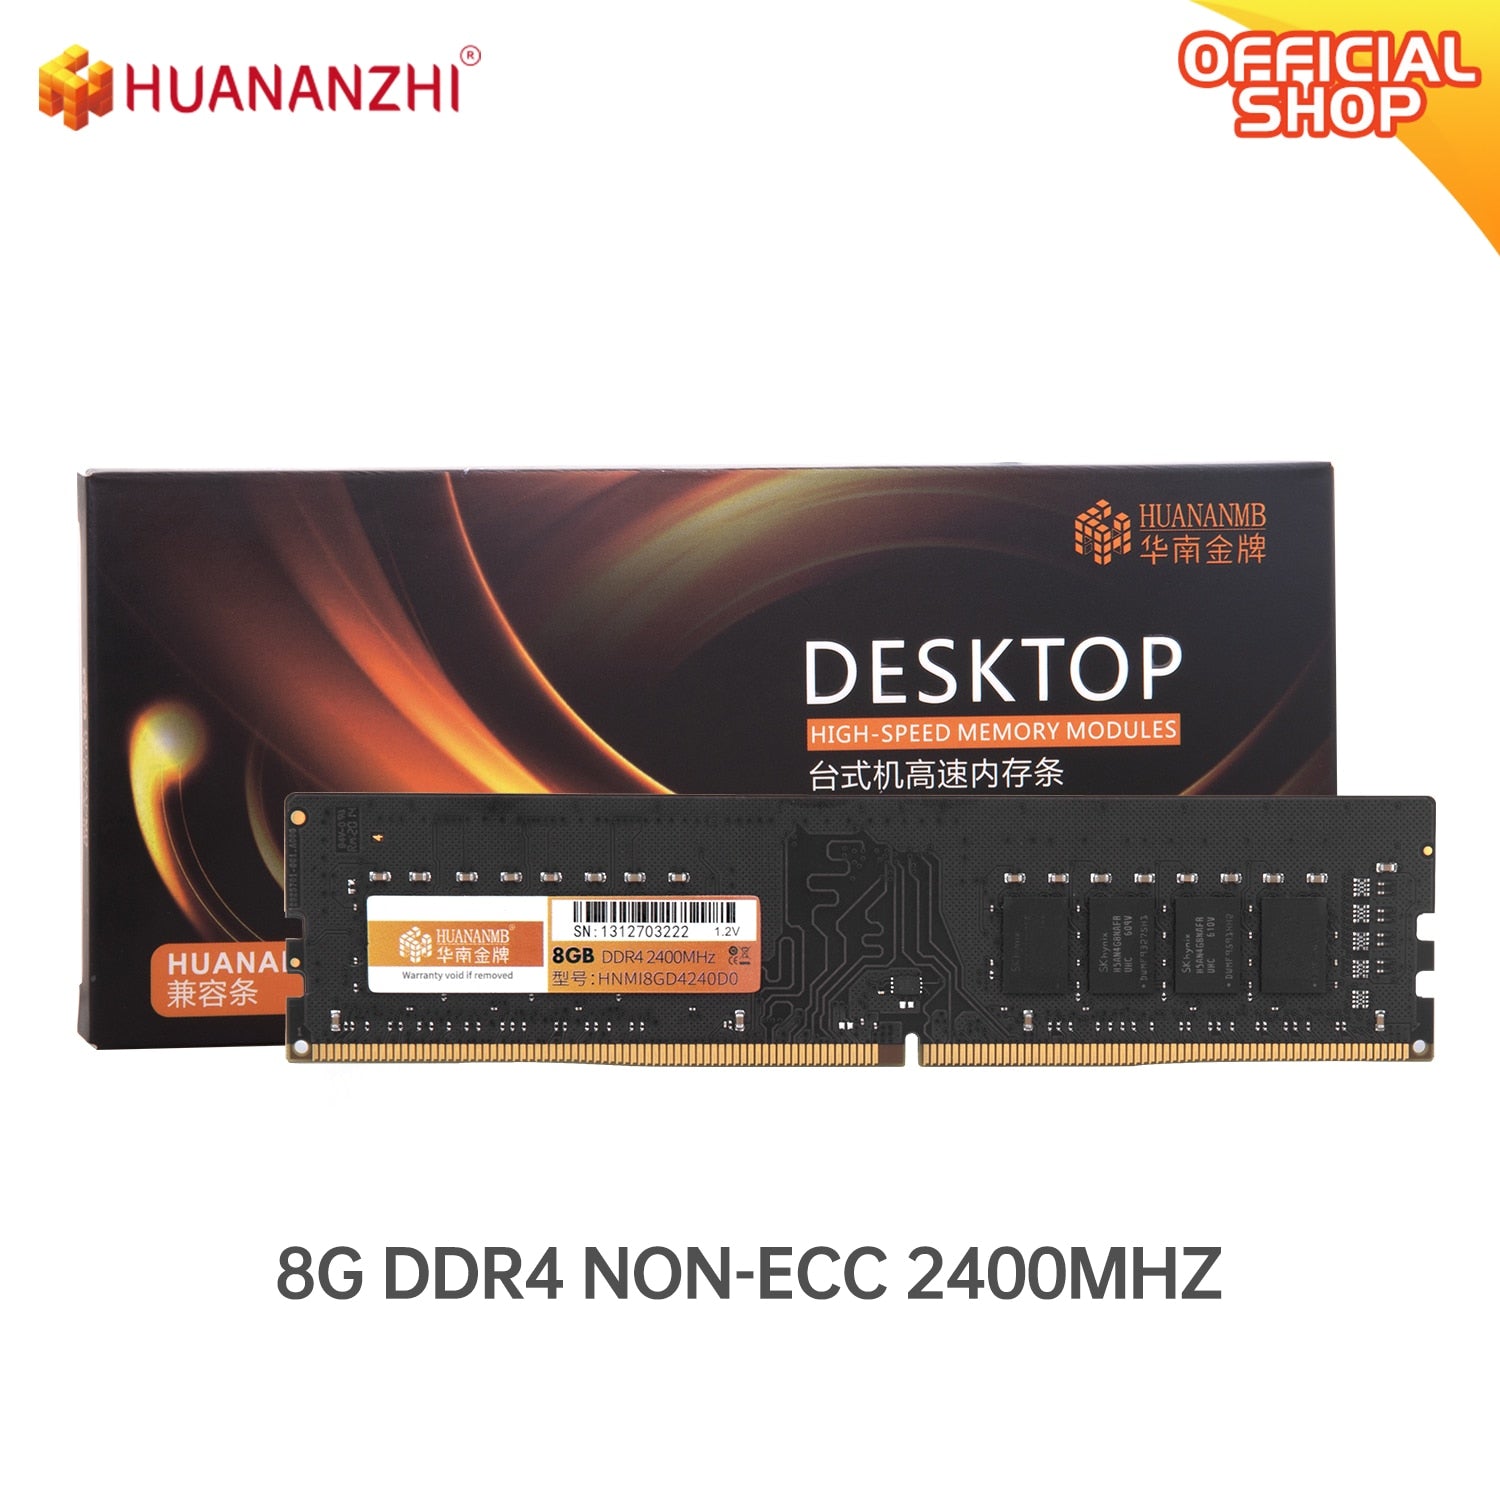 HUANANZHI  DDR3 DDR4 4GB 8GB 16GB Memory Ram 1333 1600 1866 2400 2666 3200 Desktop Memory